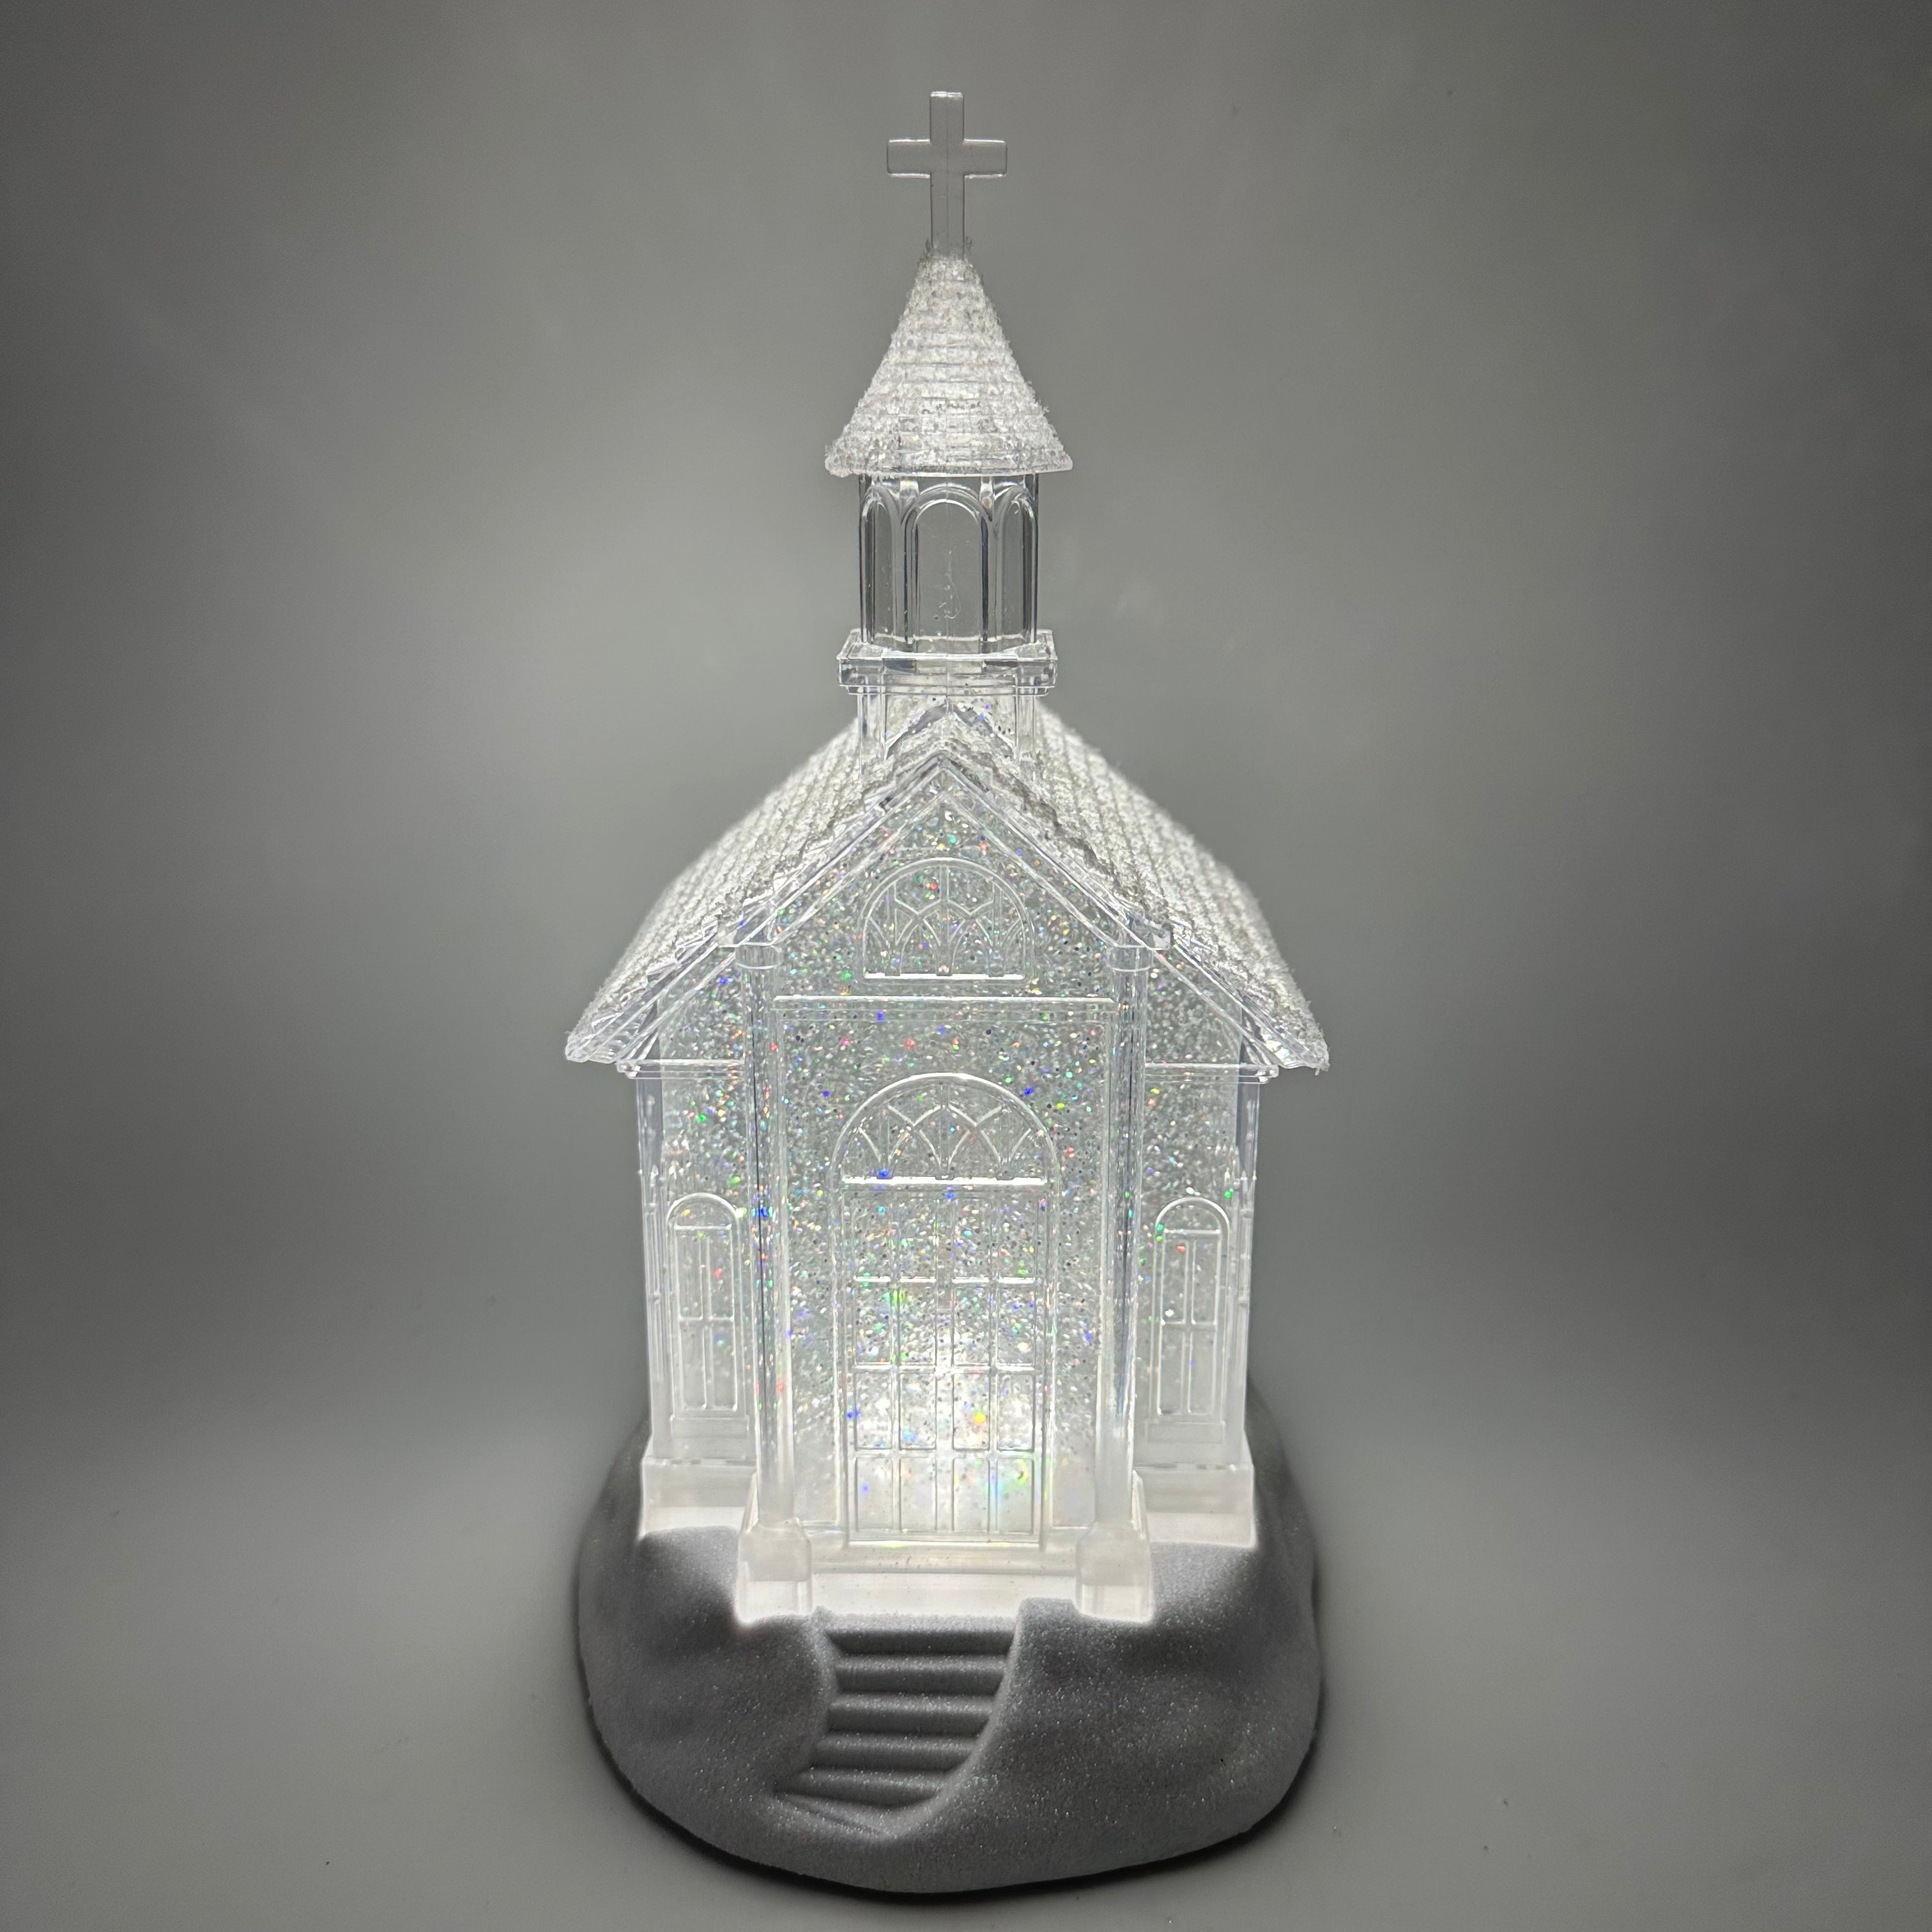 Acrylic Church Light up Snowglobe